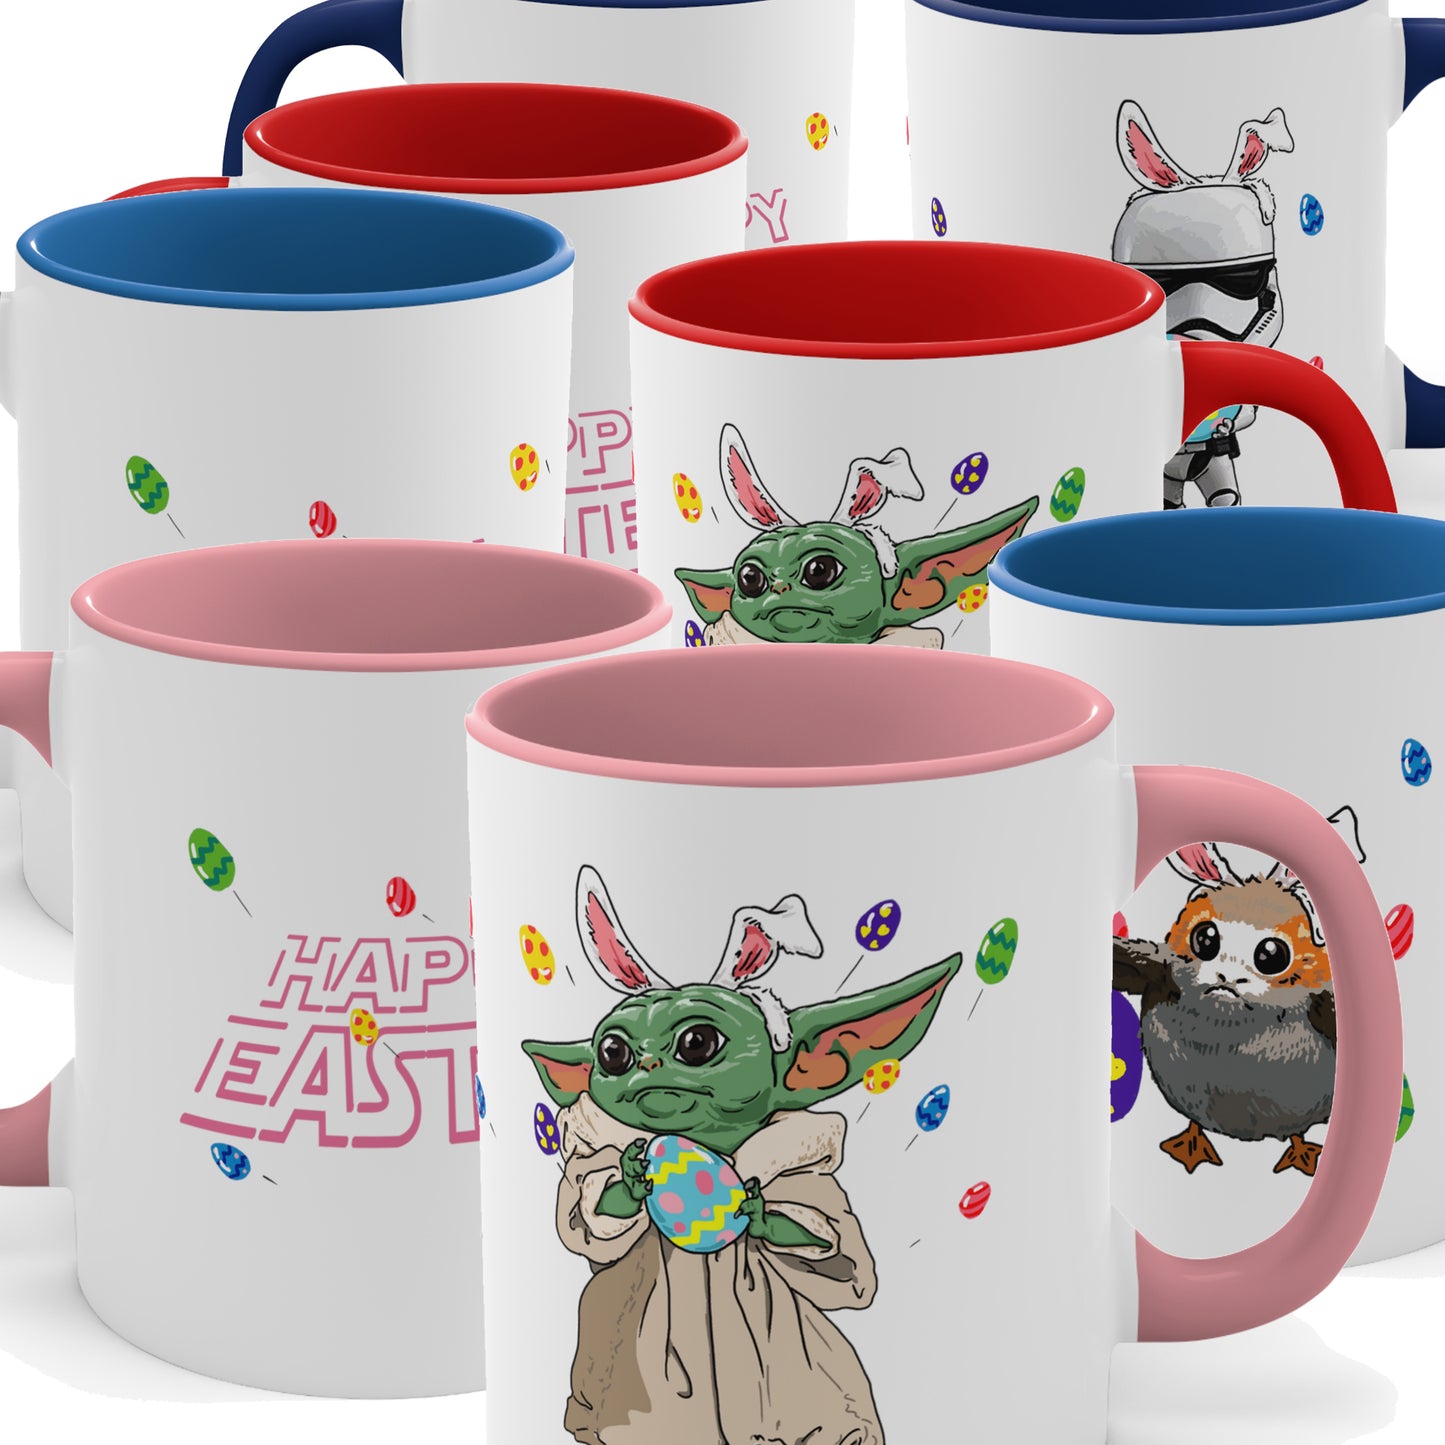 Baby Yoda Coffee Mug - Easter